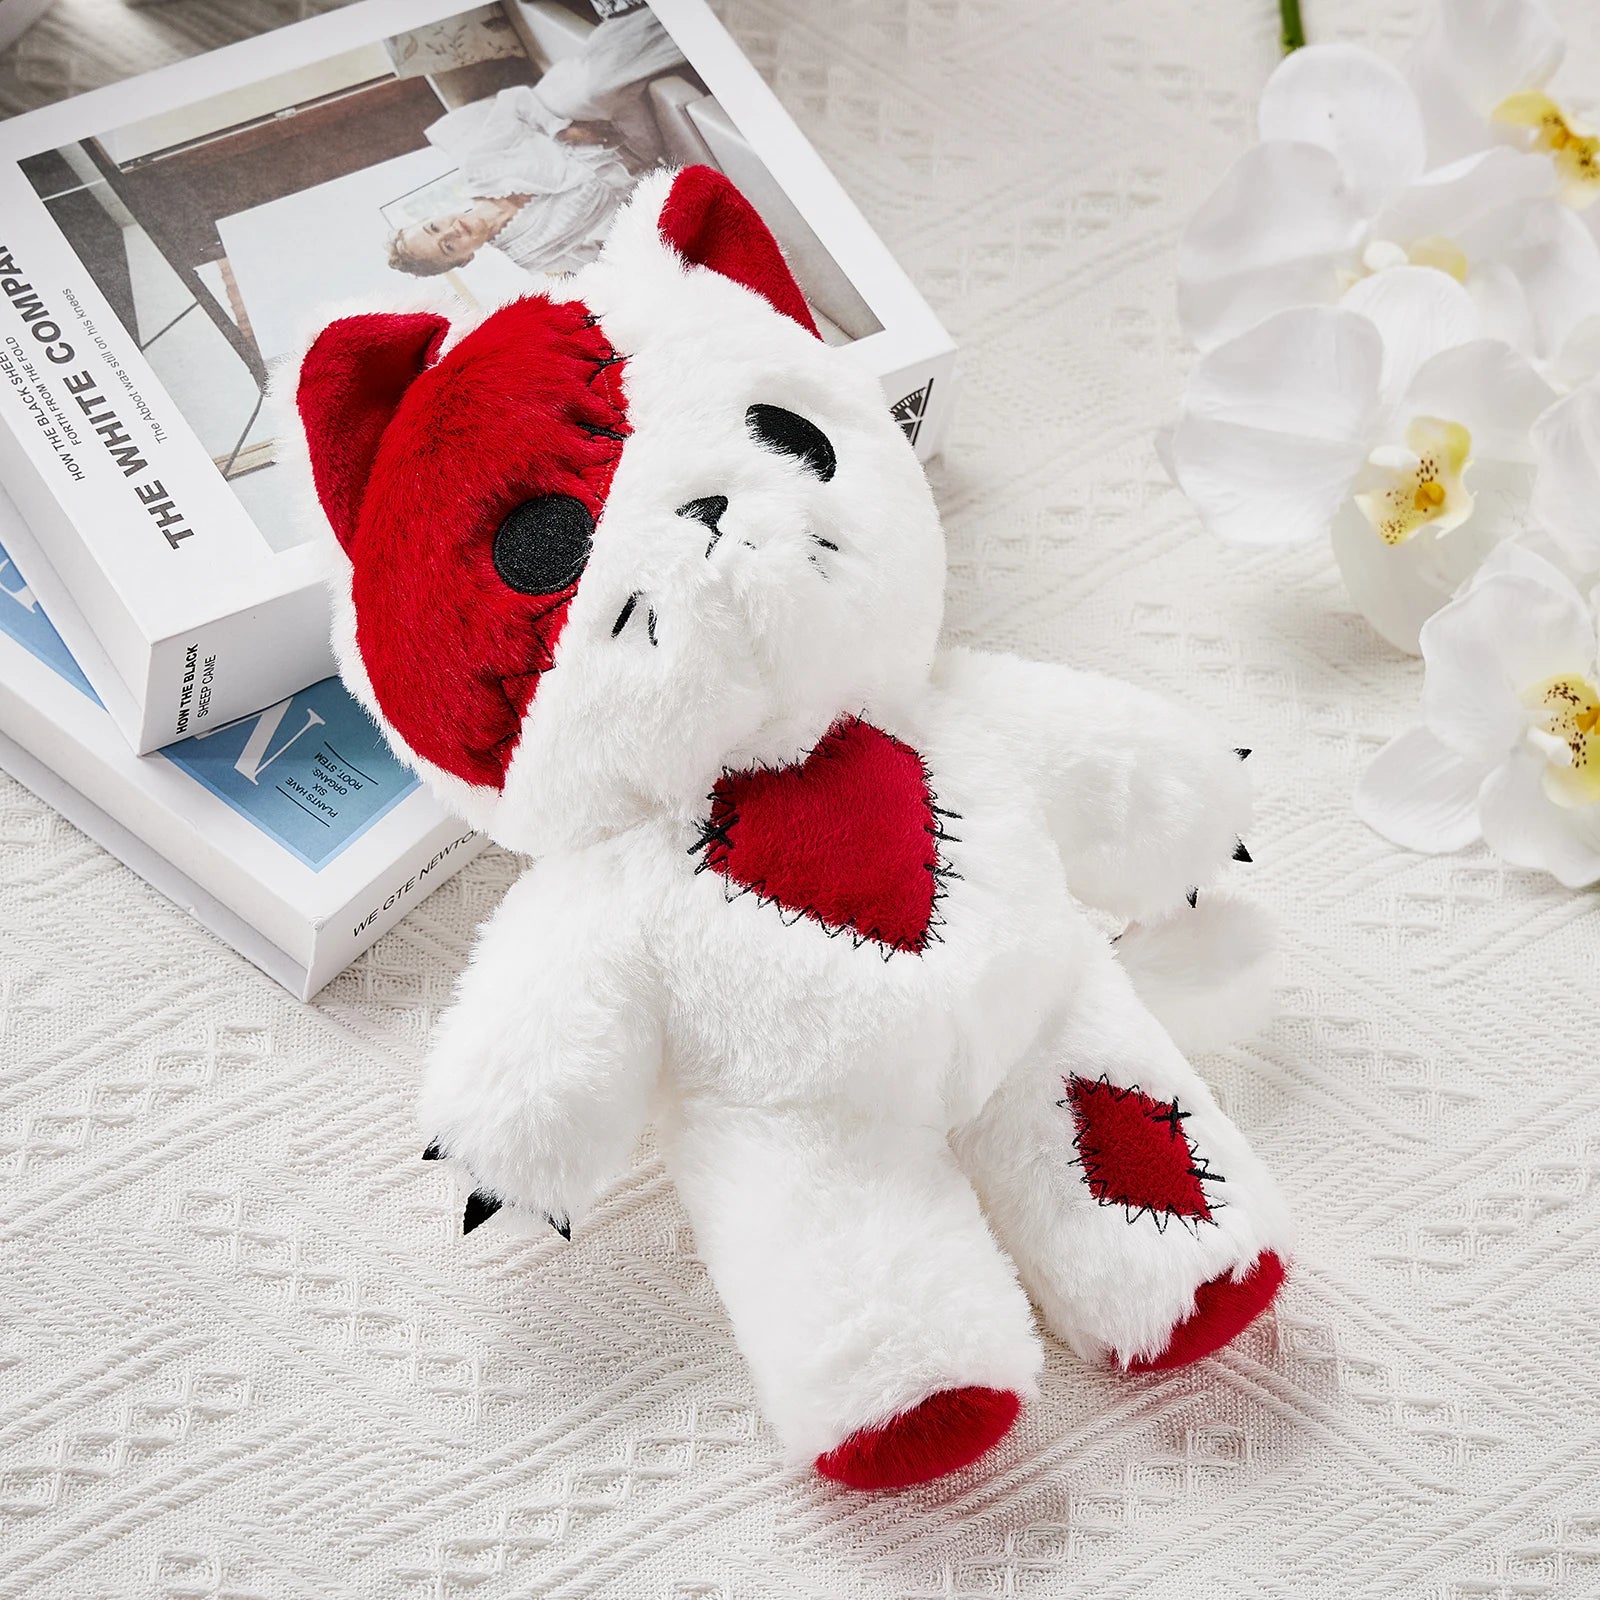 30CM Cartoon Animal Shape Plush Toy Color Matching Stuffed Heart Bunny/Bear Doll Throw Pillow Festival Present Home Decoration